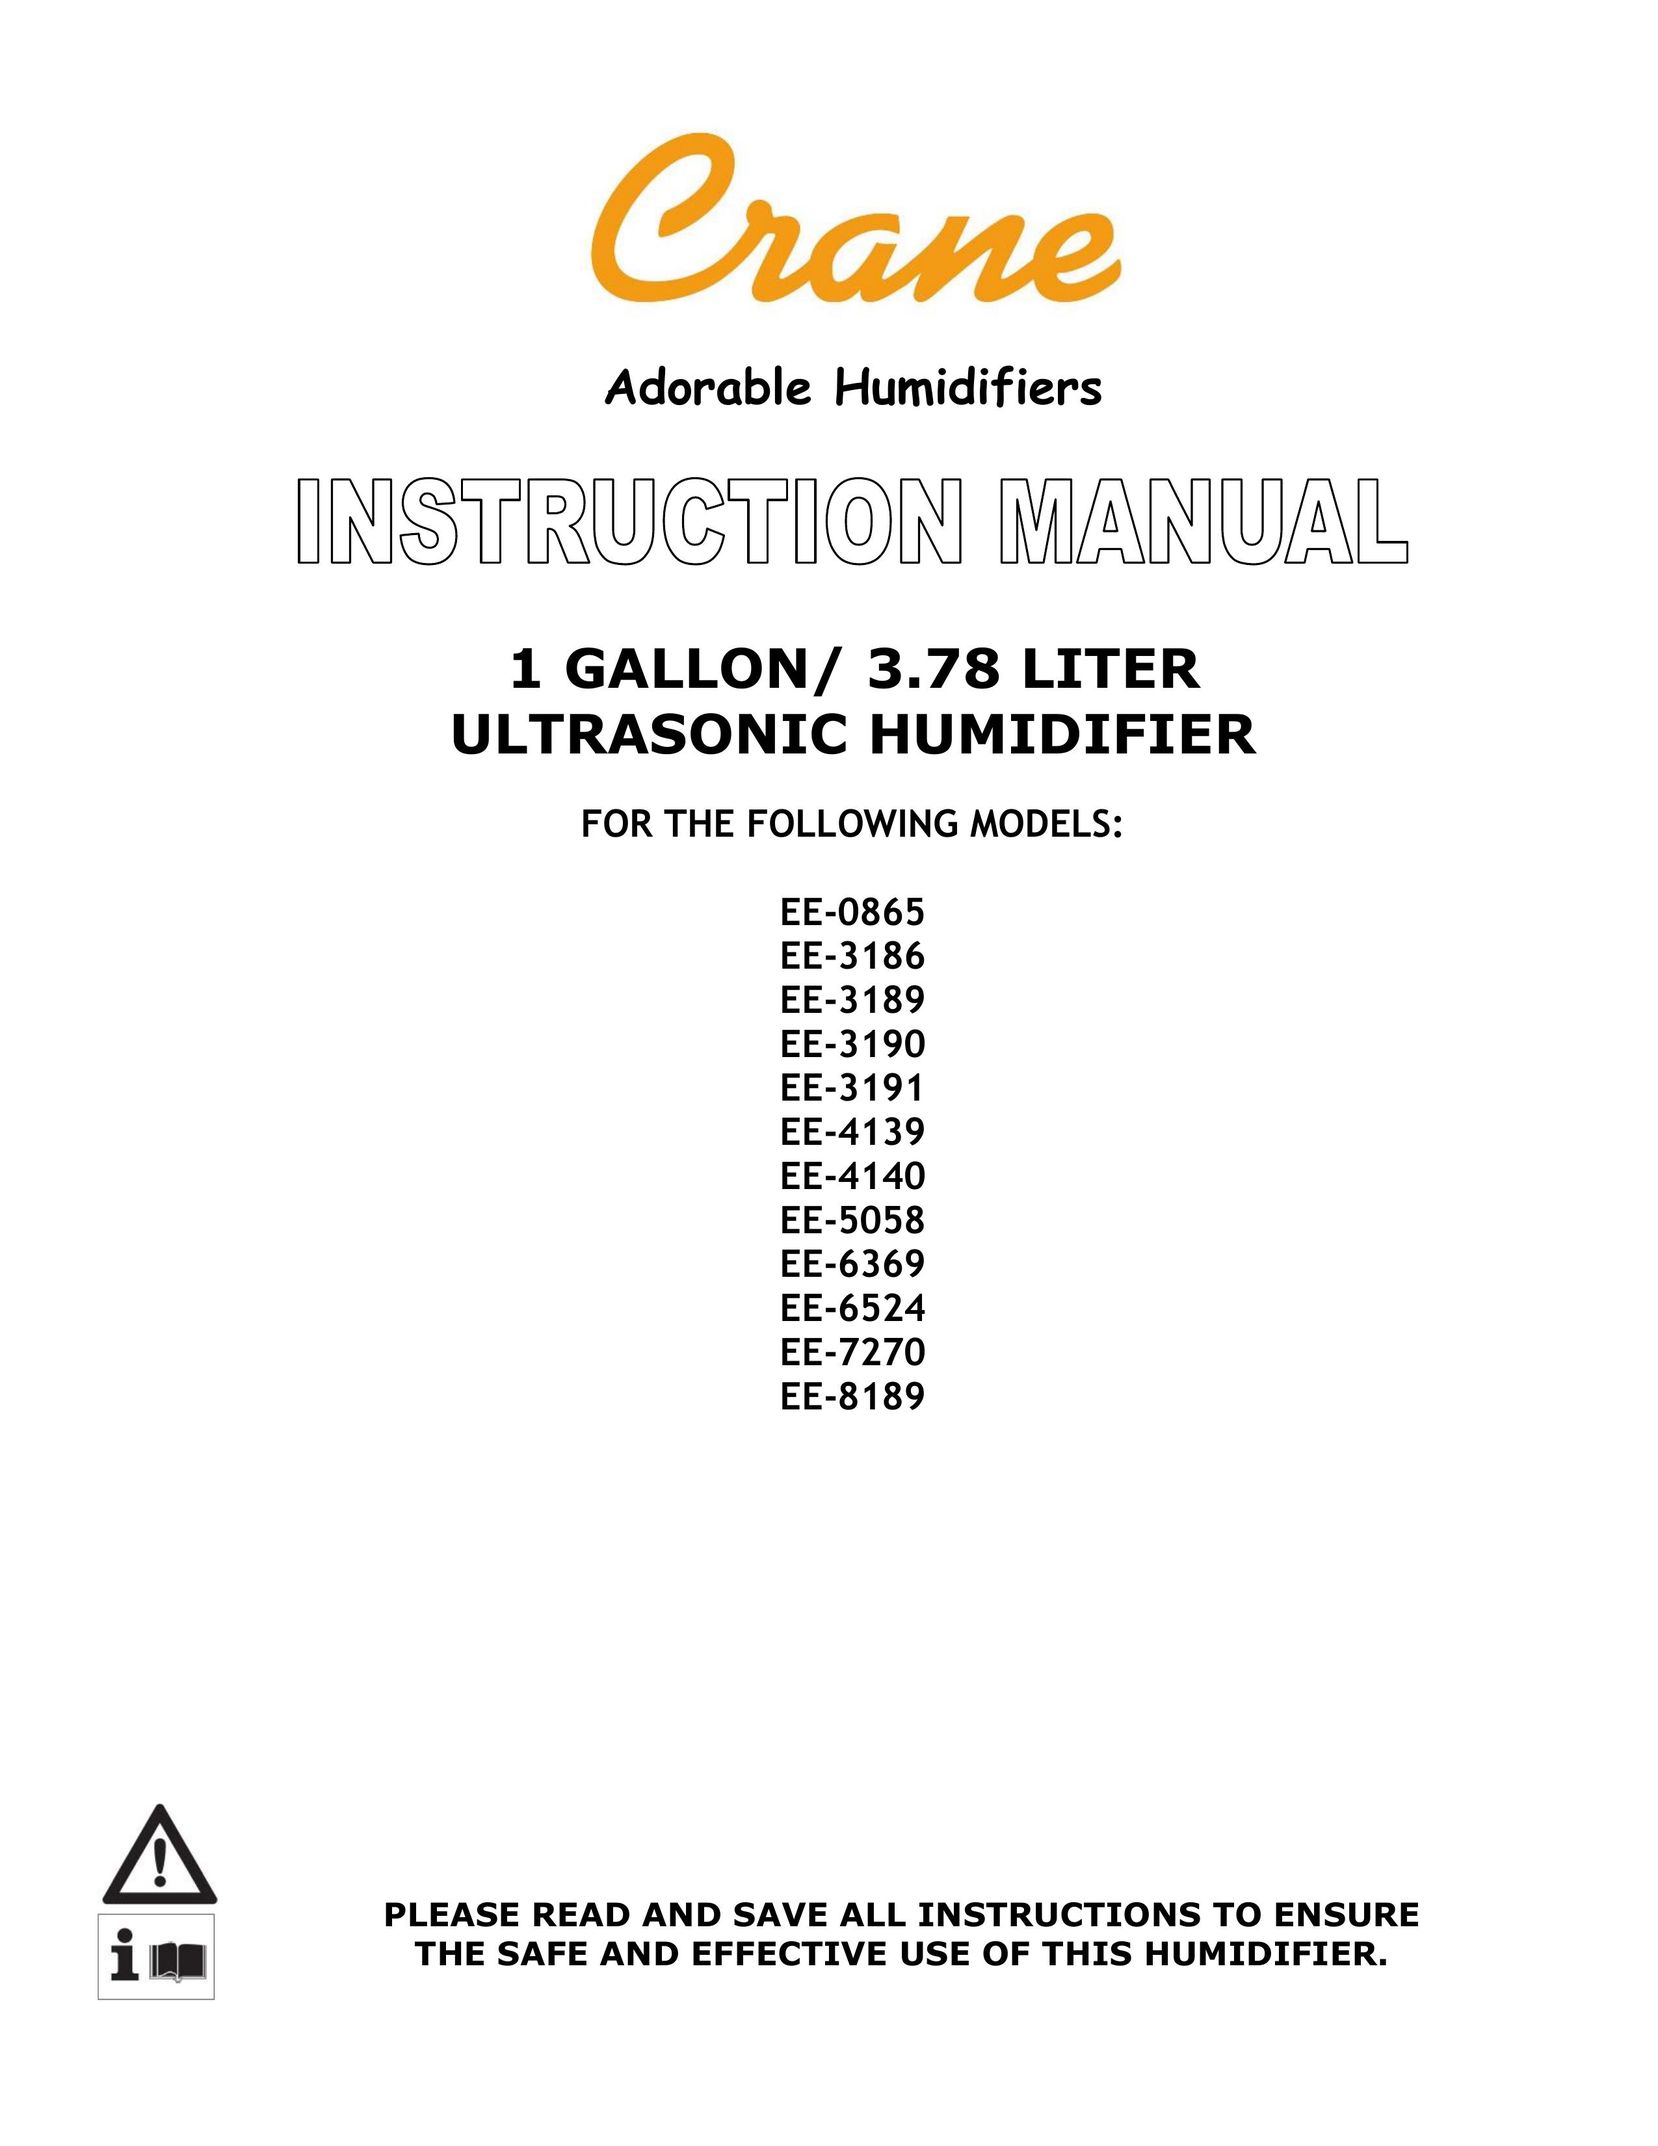 Crane EE-3190 Humidifier User Manual